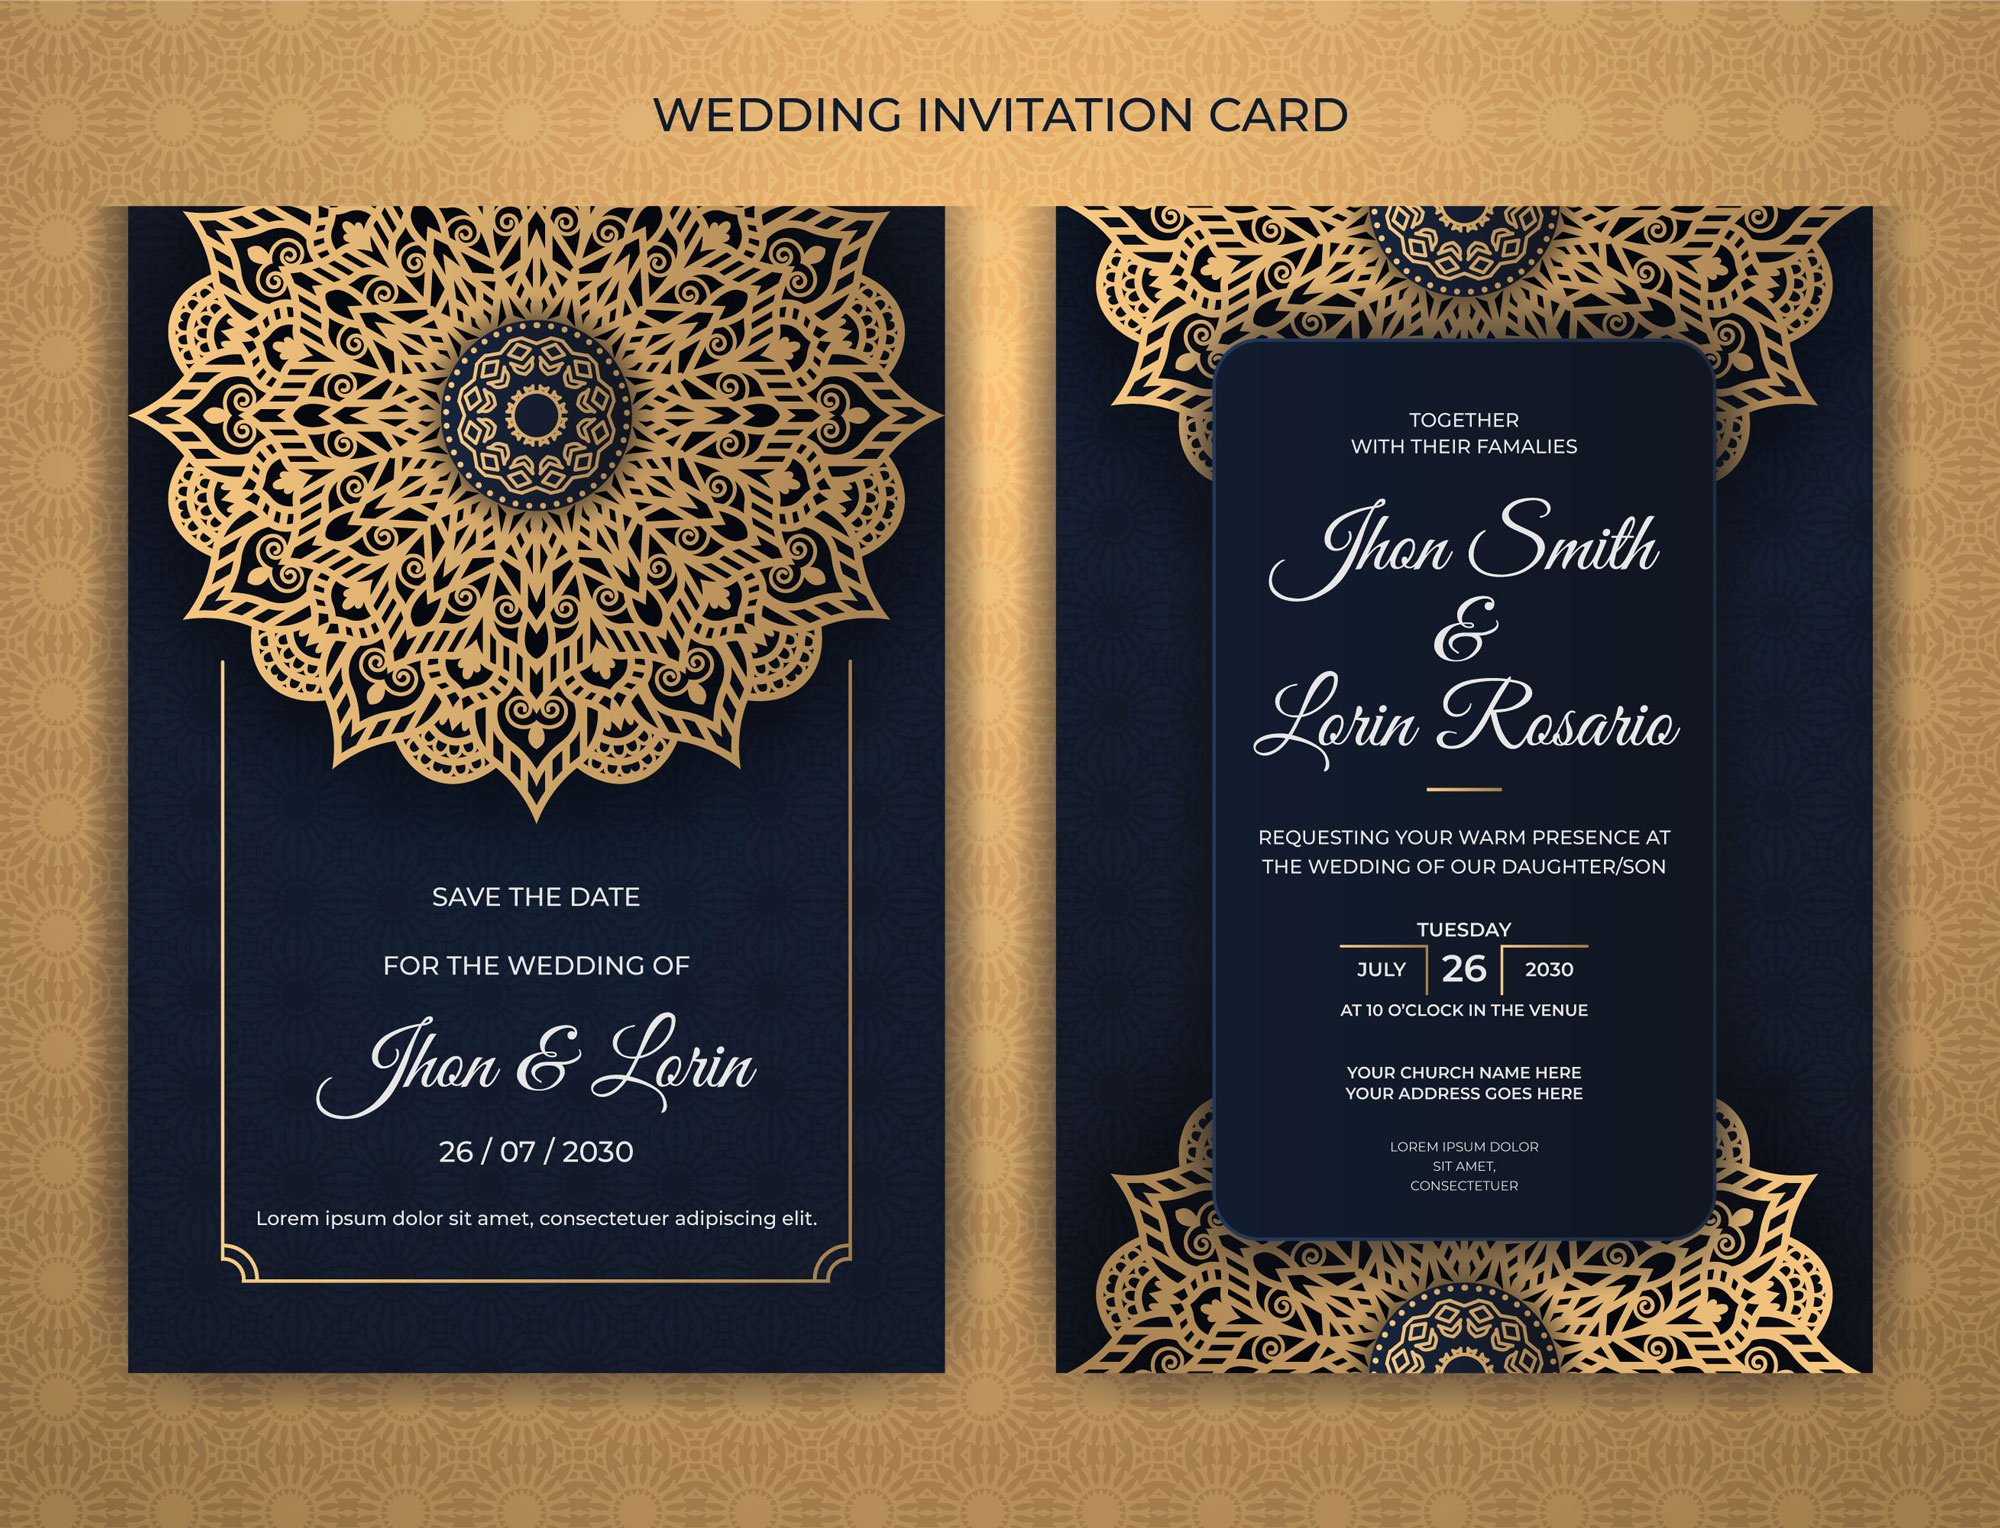 4 In One Luxury Wedding Invitation Card Design example.